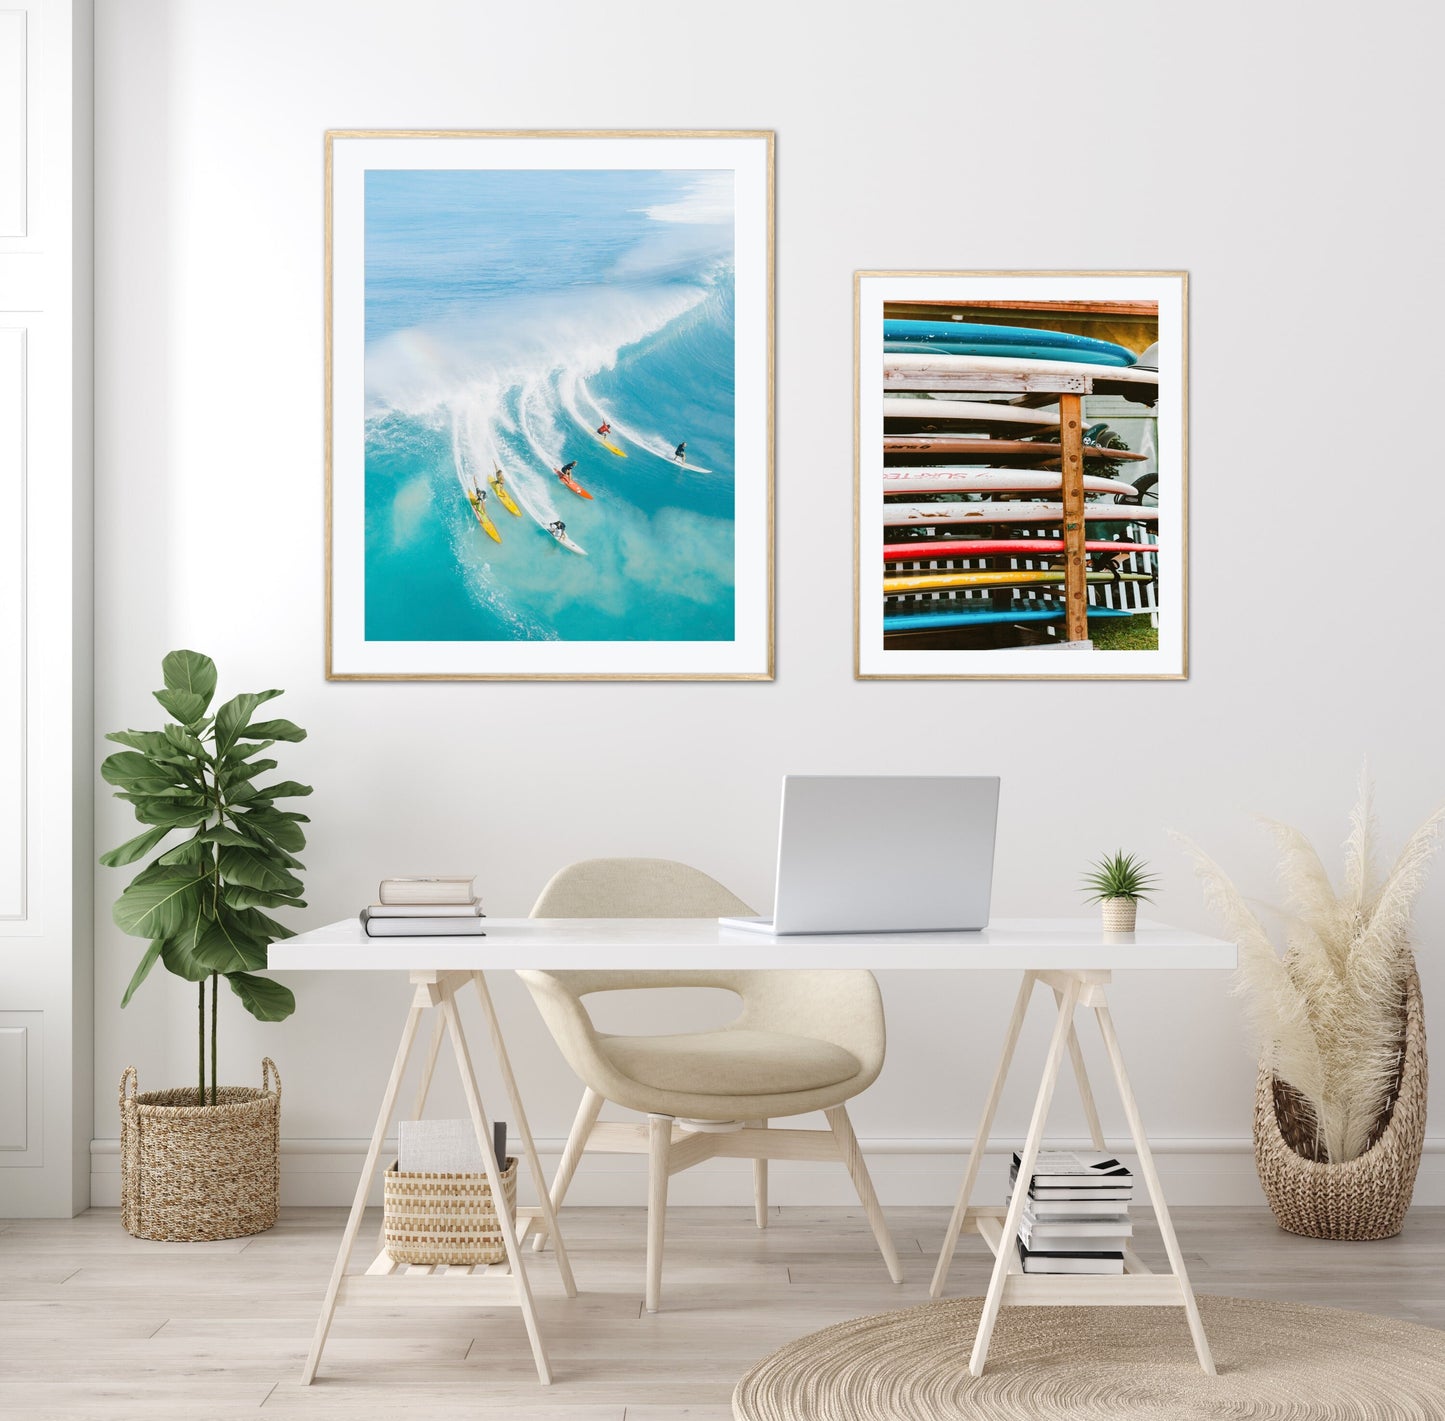 Set of 3 surfboard decor DIGITAL PRINT, Surf prints, Surfboard wall art, Vintage van print, Wave digital print, Coastal wall decor, surf art